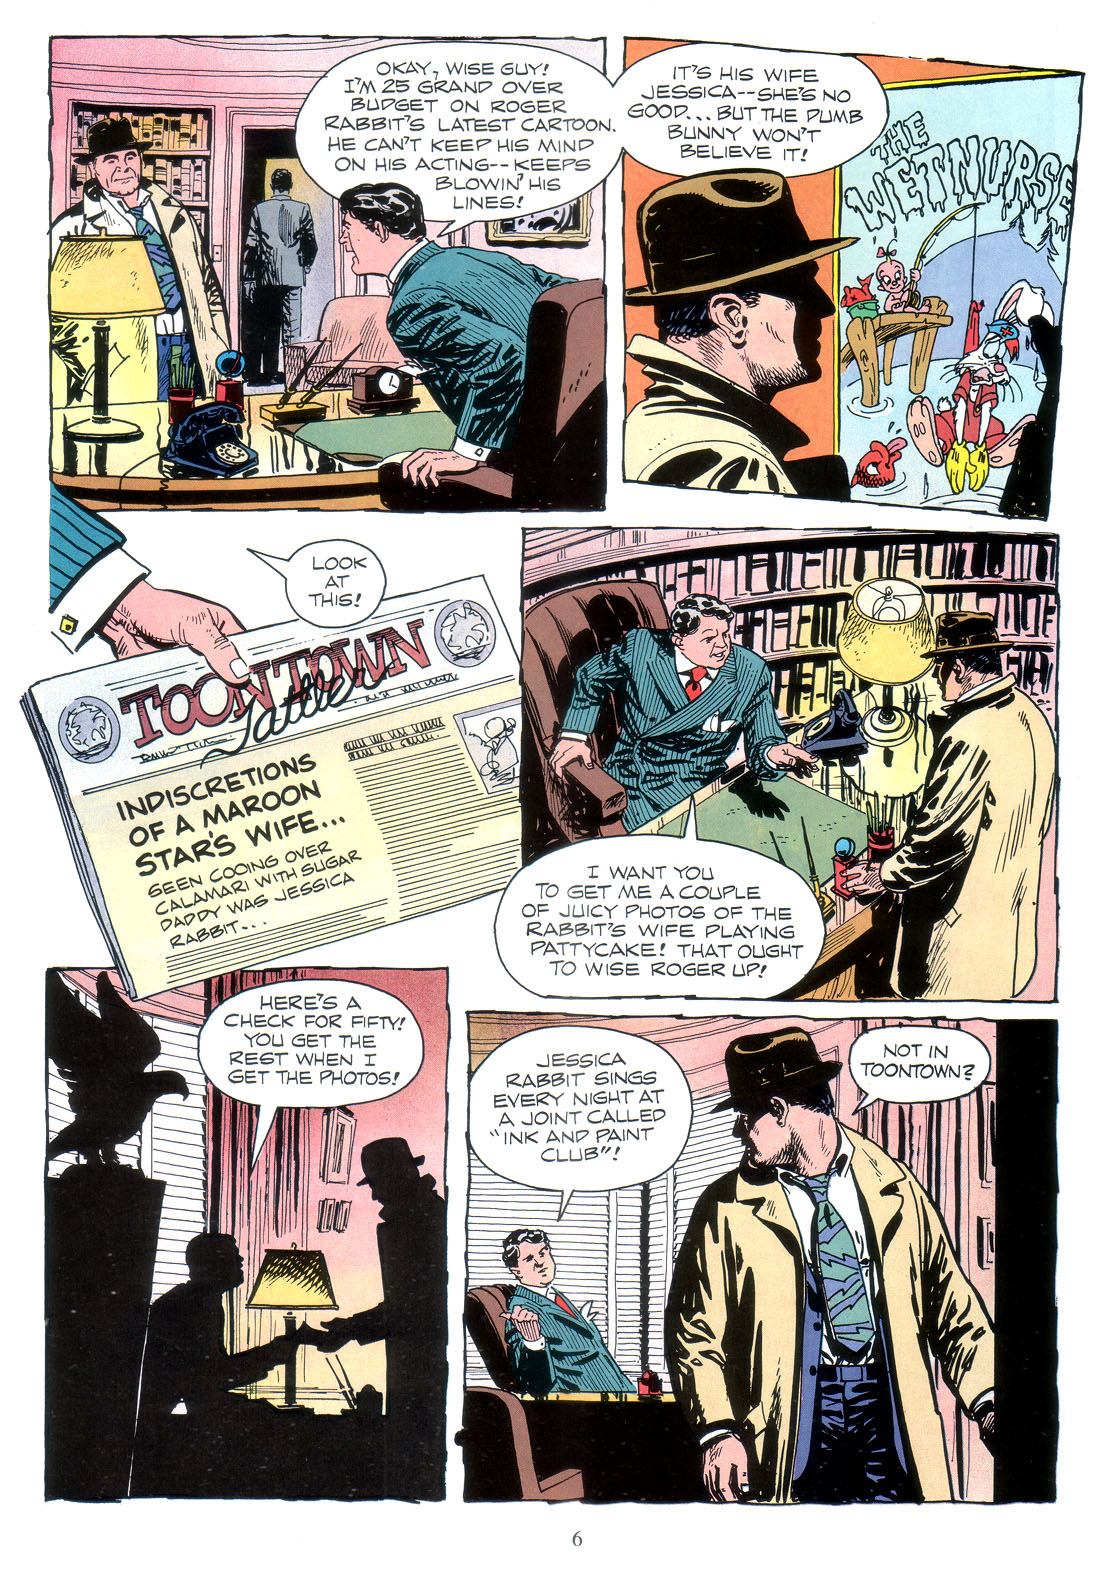 Marvel Graphic Novel issue 41 - Who Framed Roger Rabbit - Page 8